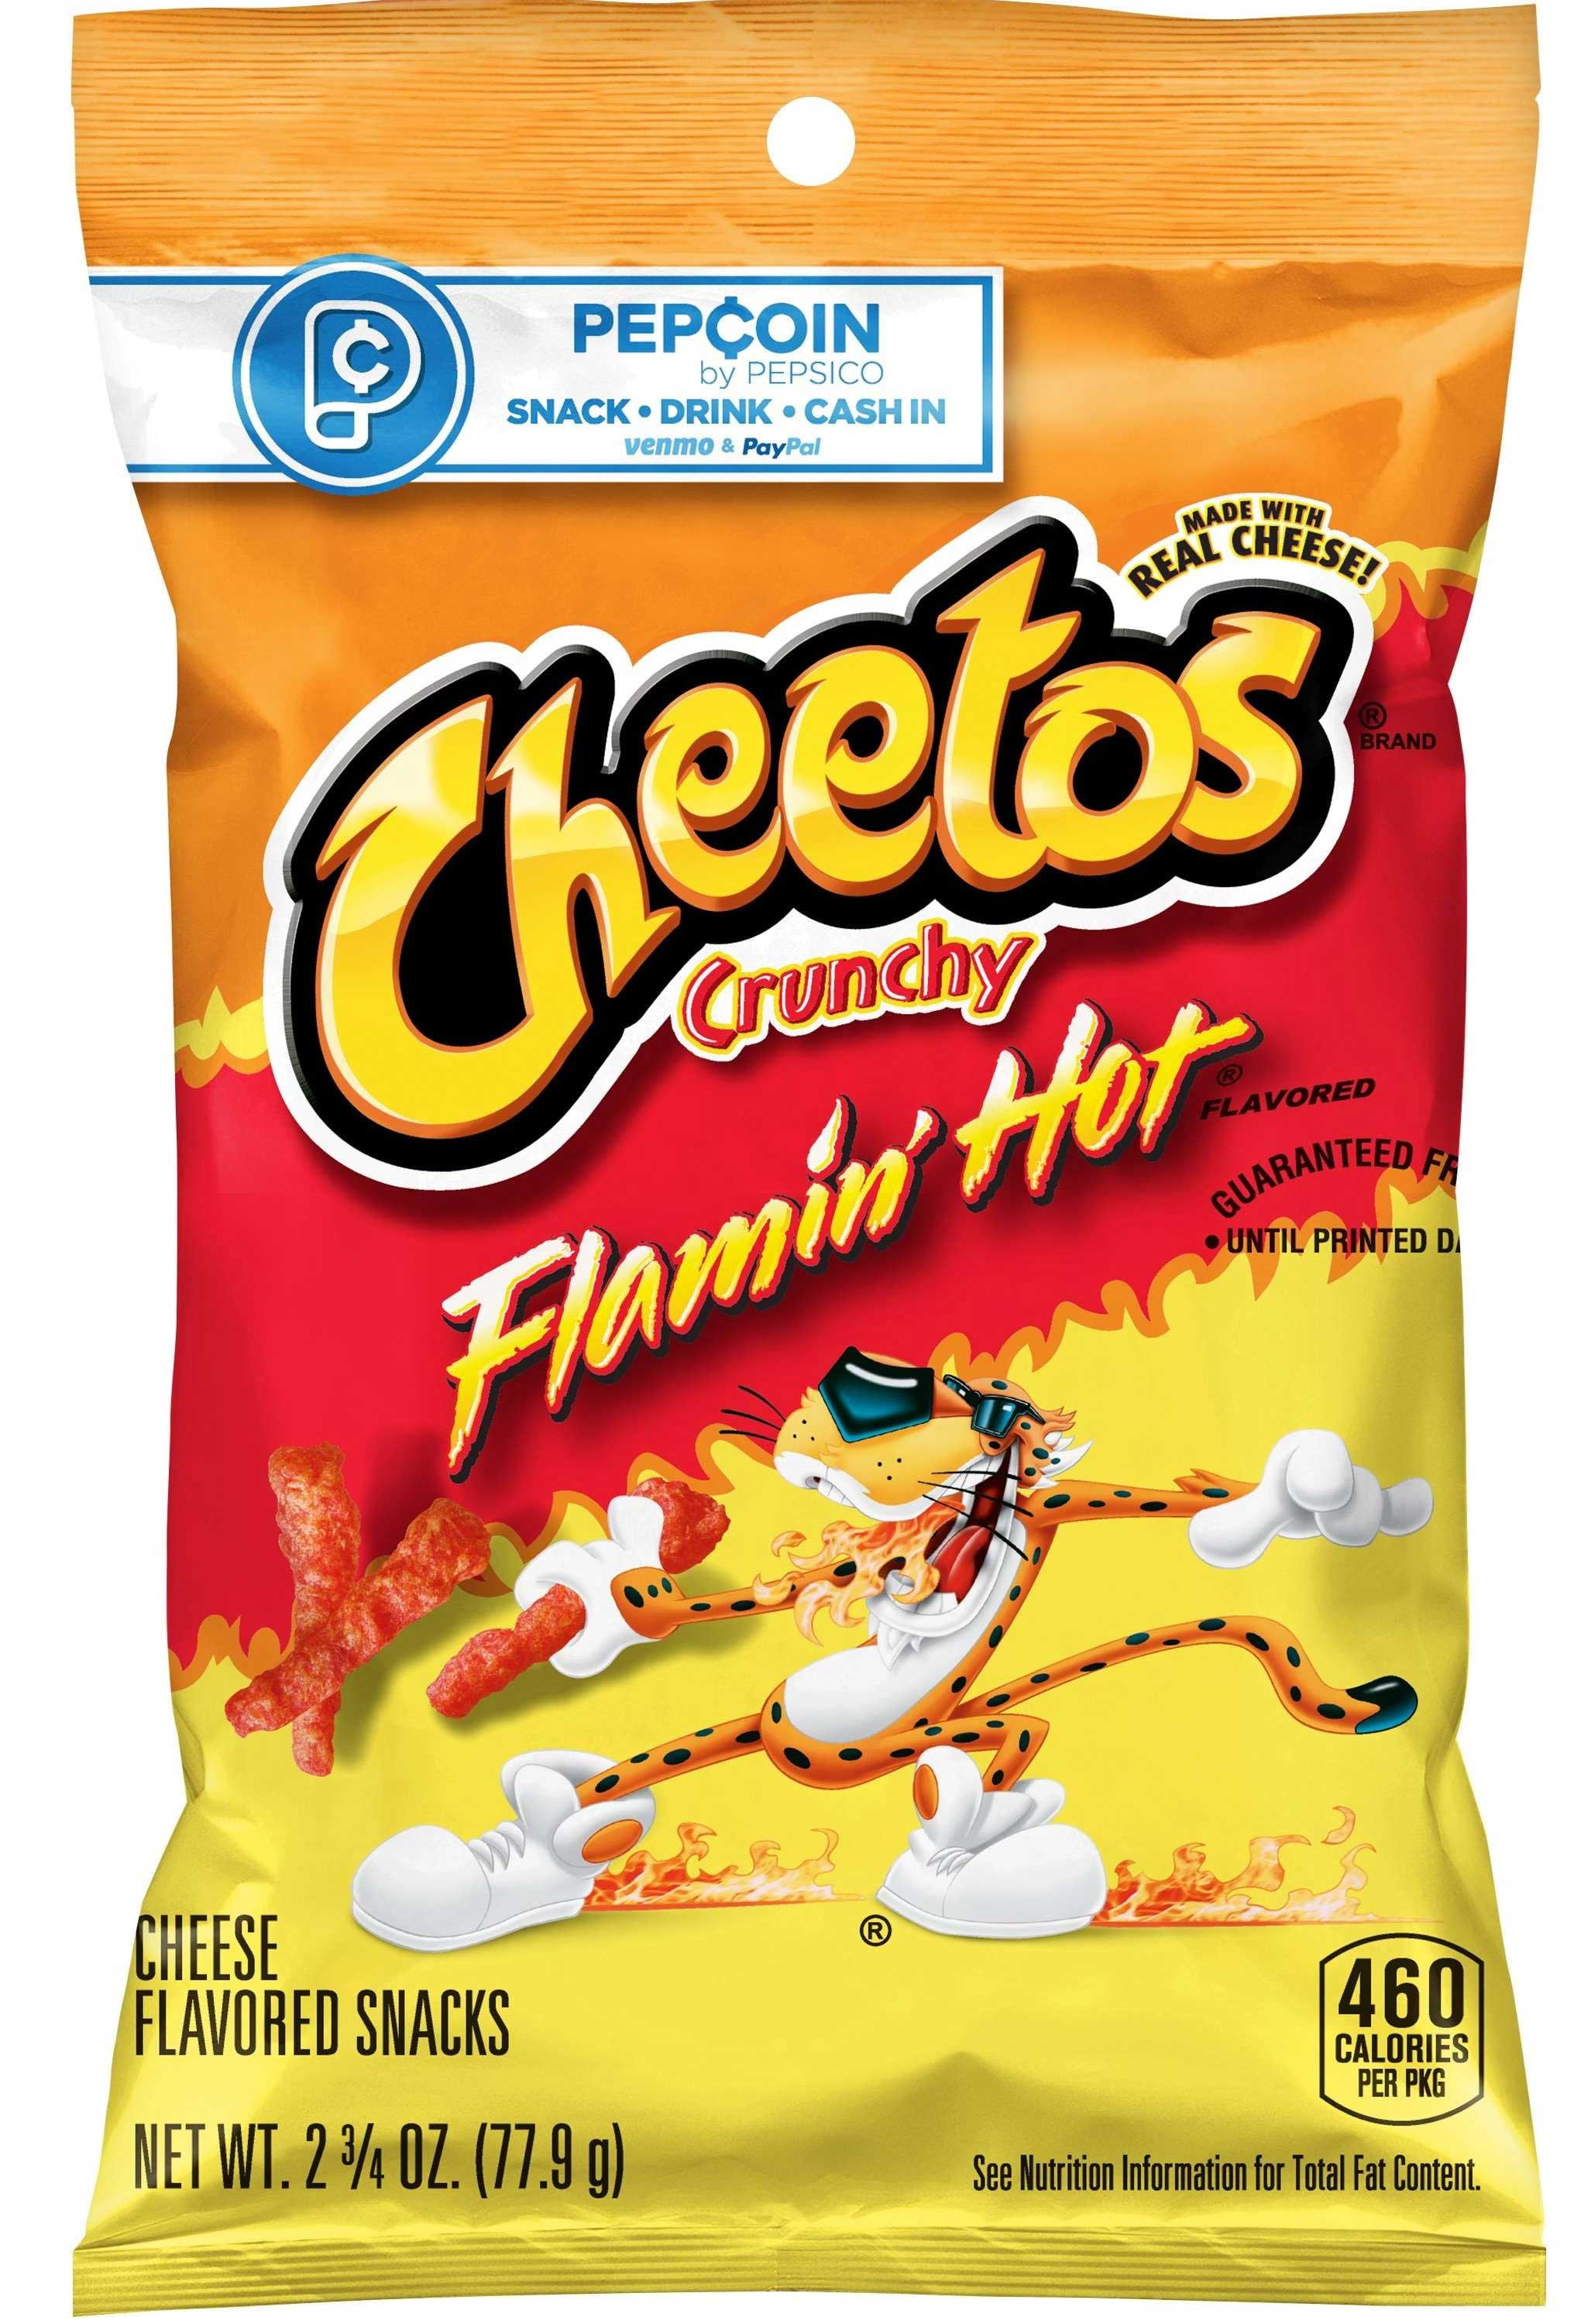 Cheetos Flamin' Hot Crunchy Cheese Snacks (2 oz., 64 ct.) - Sam's Club